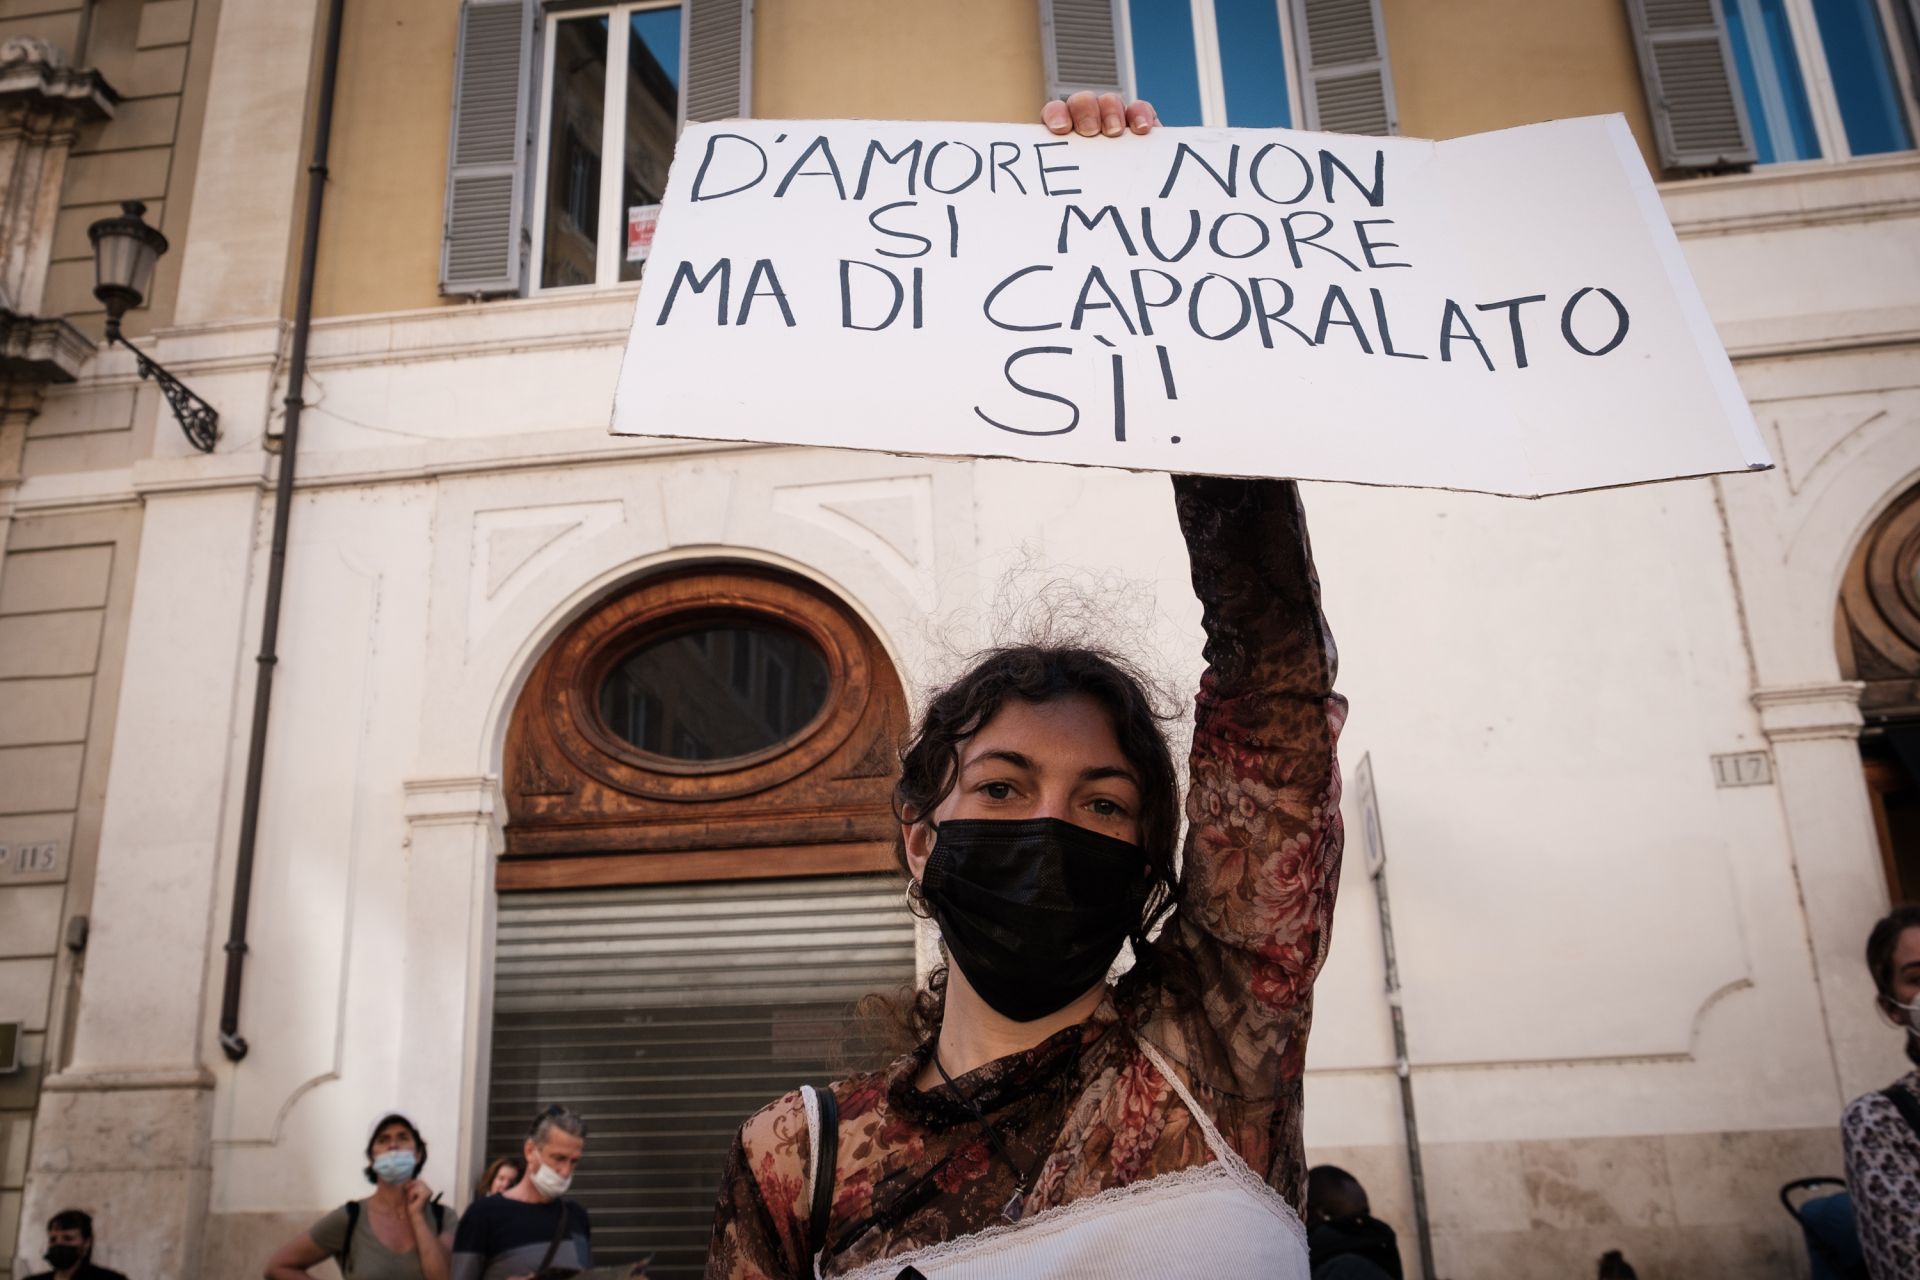 On Tuscany’s Farms, Women Migrant Laborers Face Exploitation